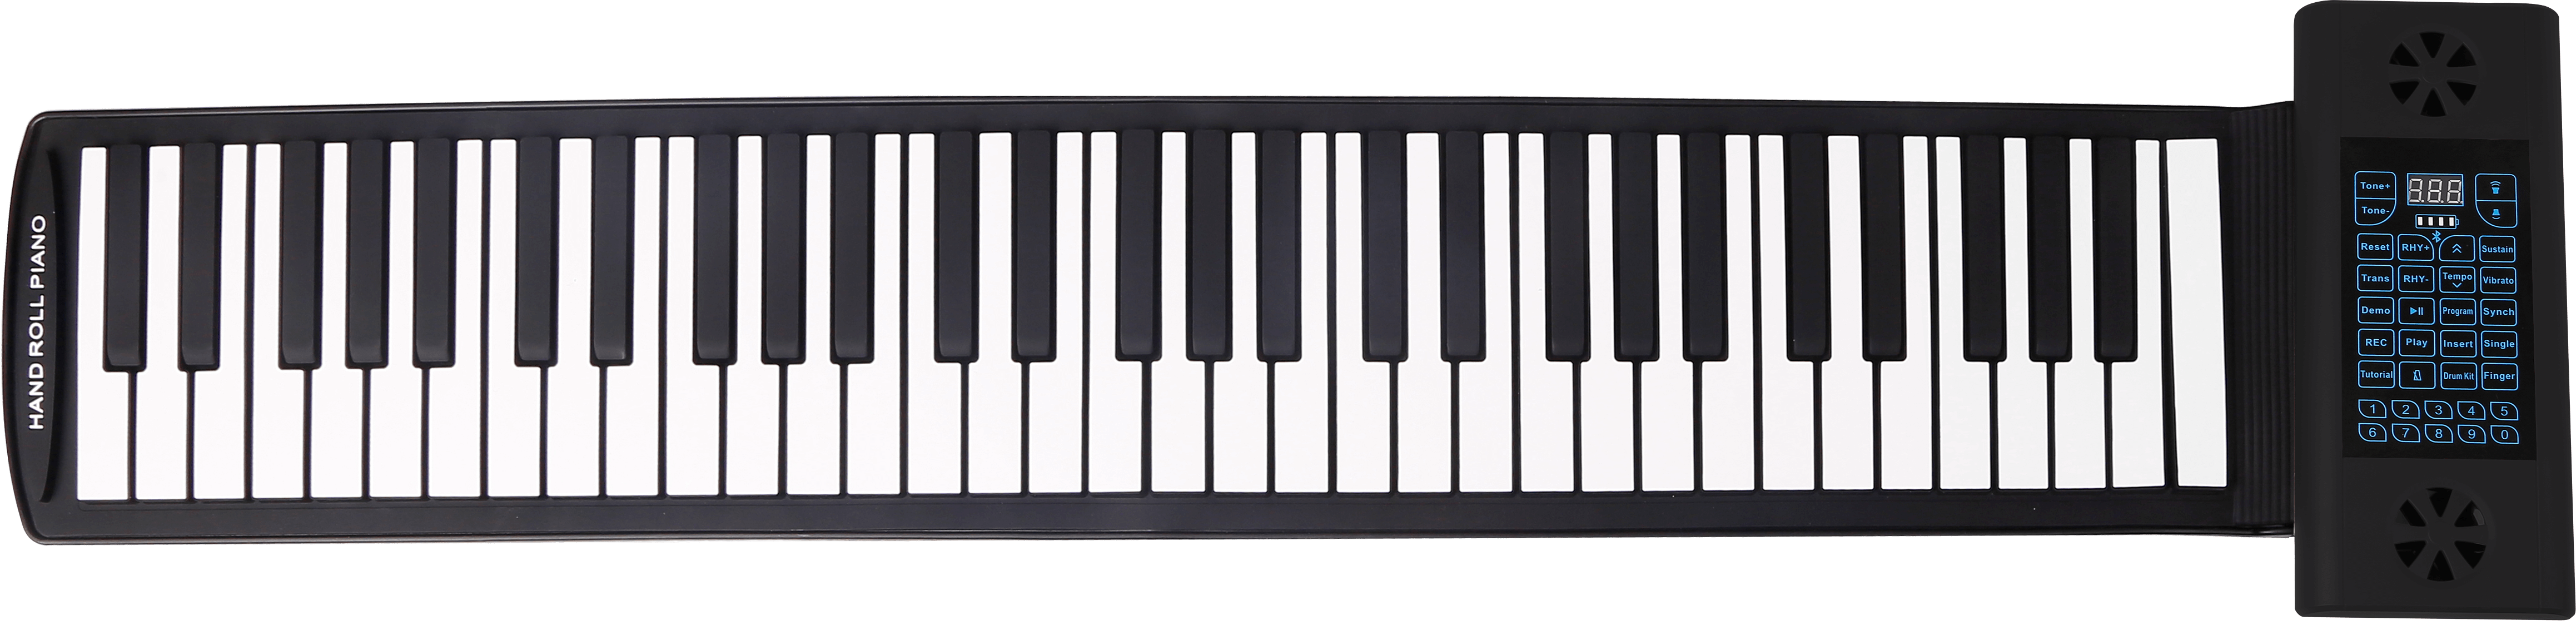 силиконово пиано с 61 ключа